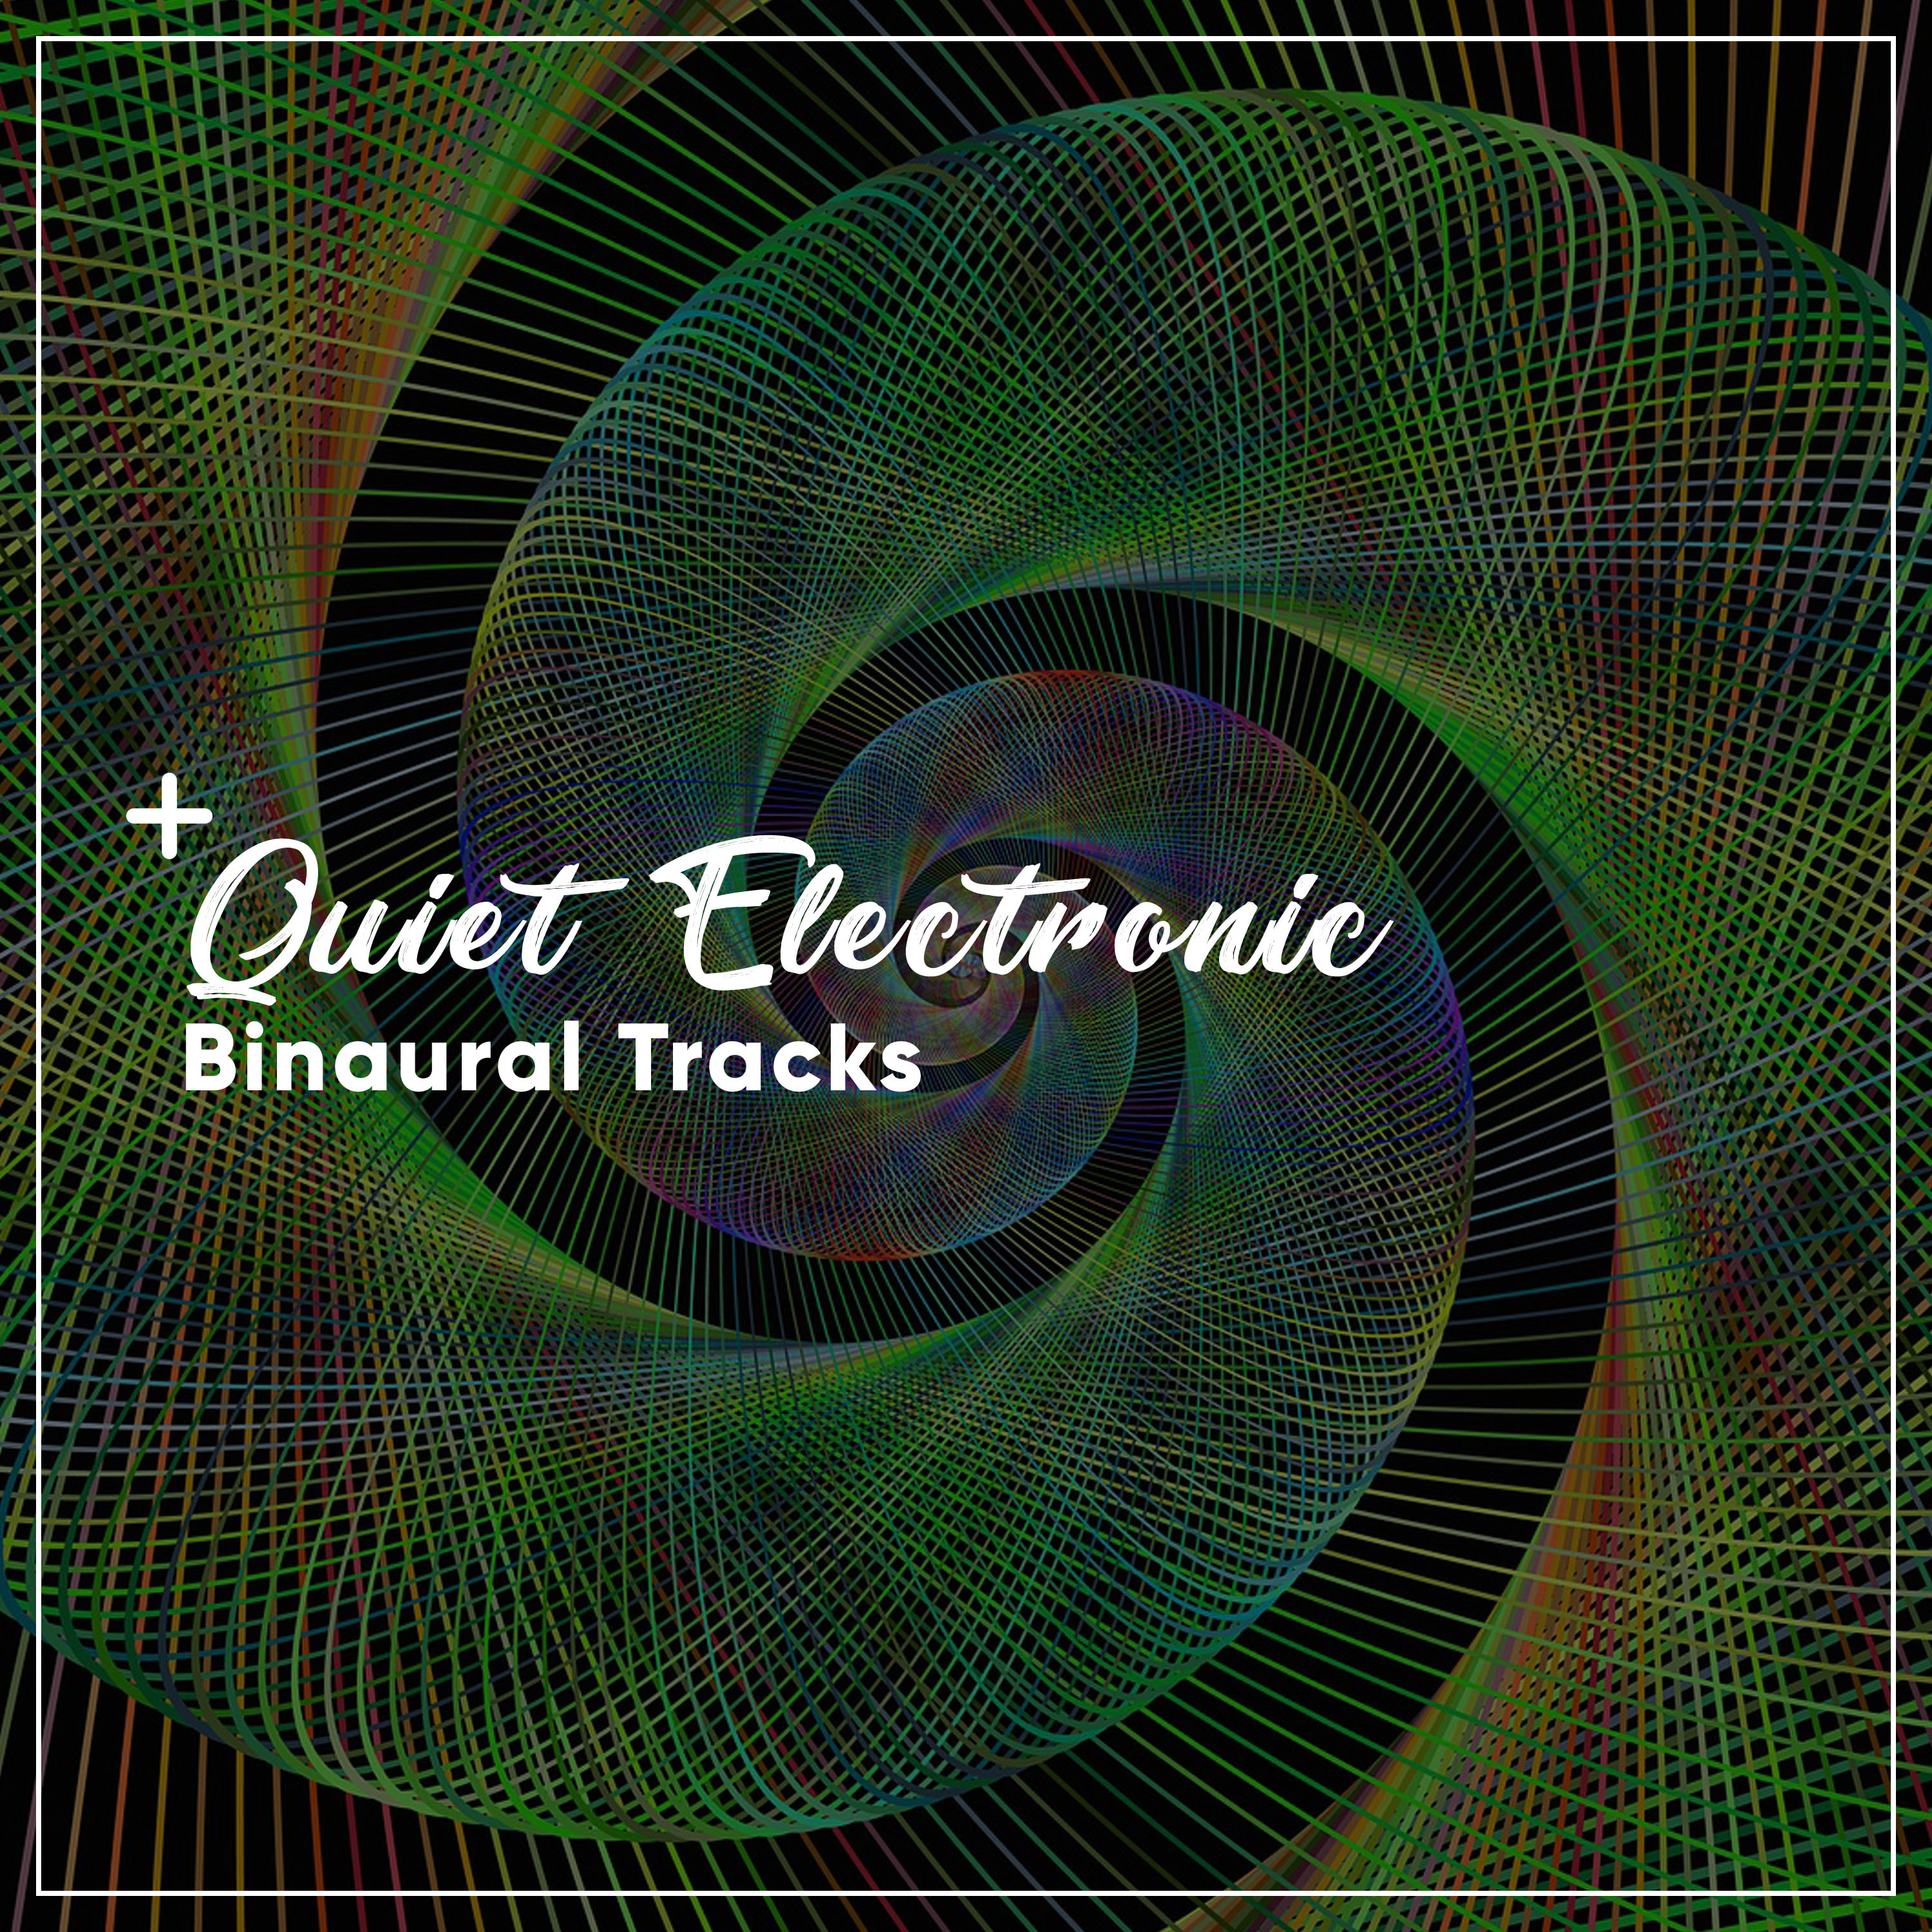 #2018 Quiet Electronic Binaural Tracks